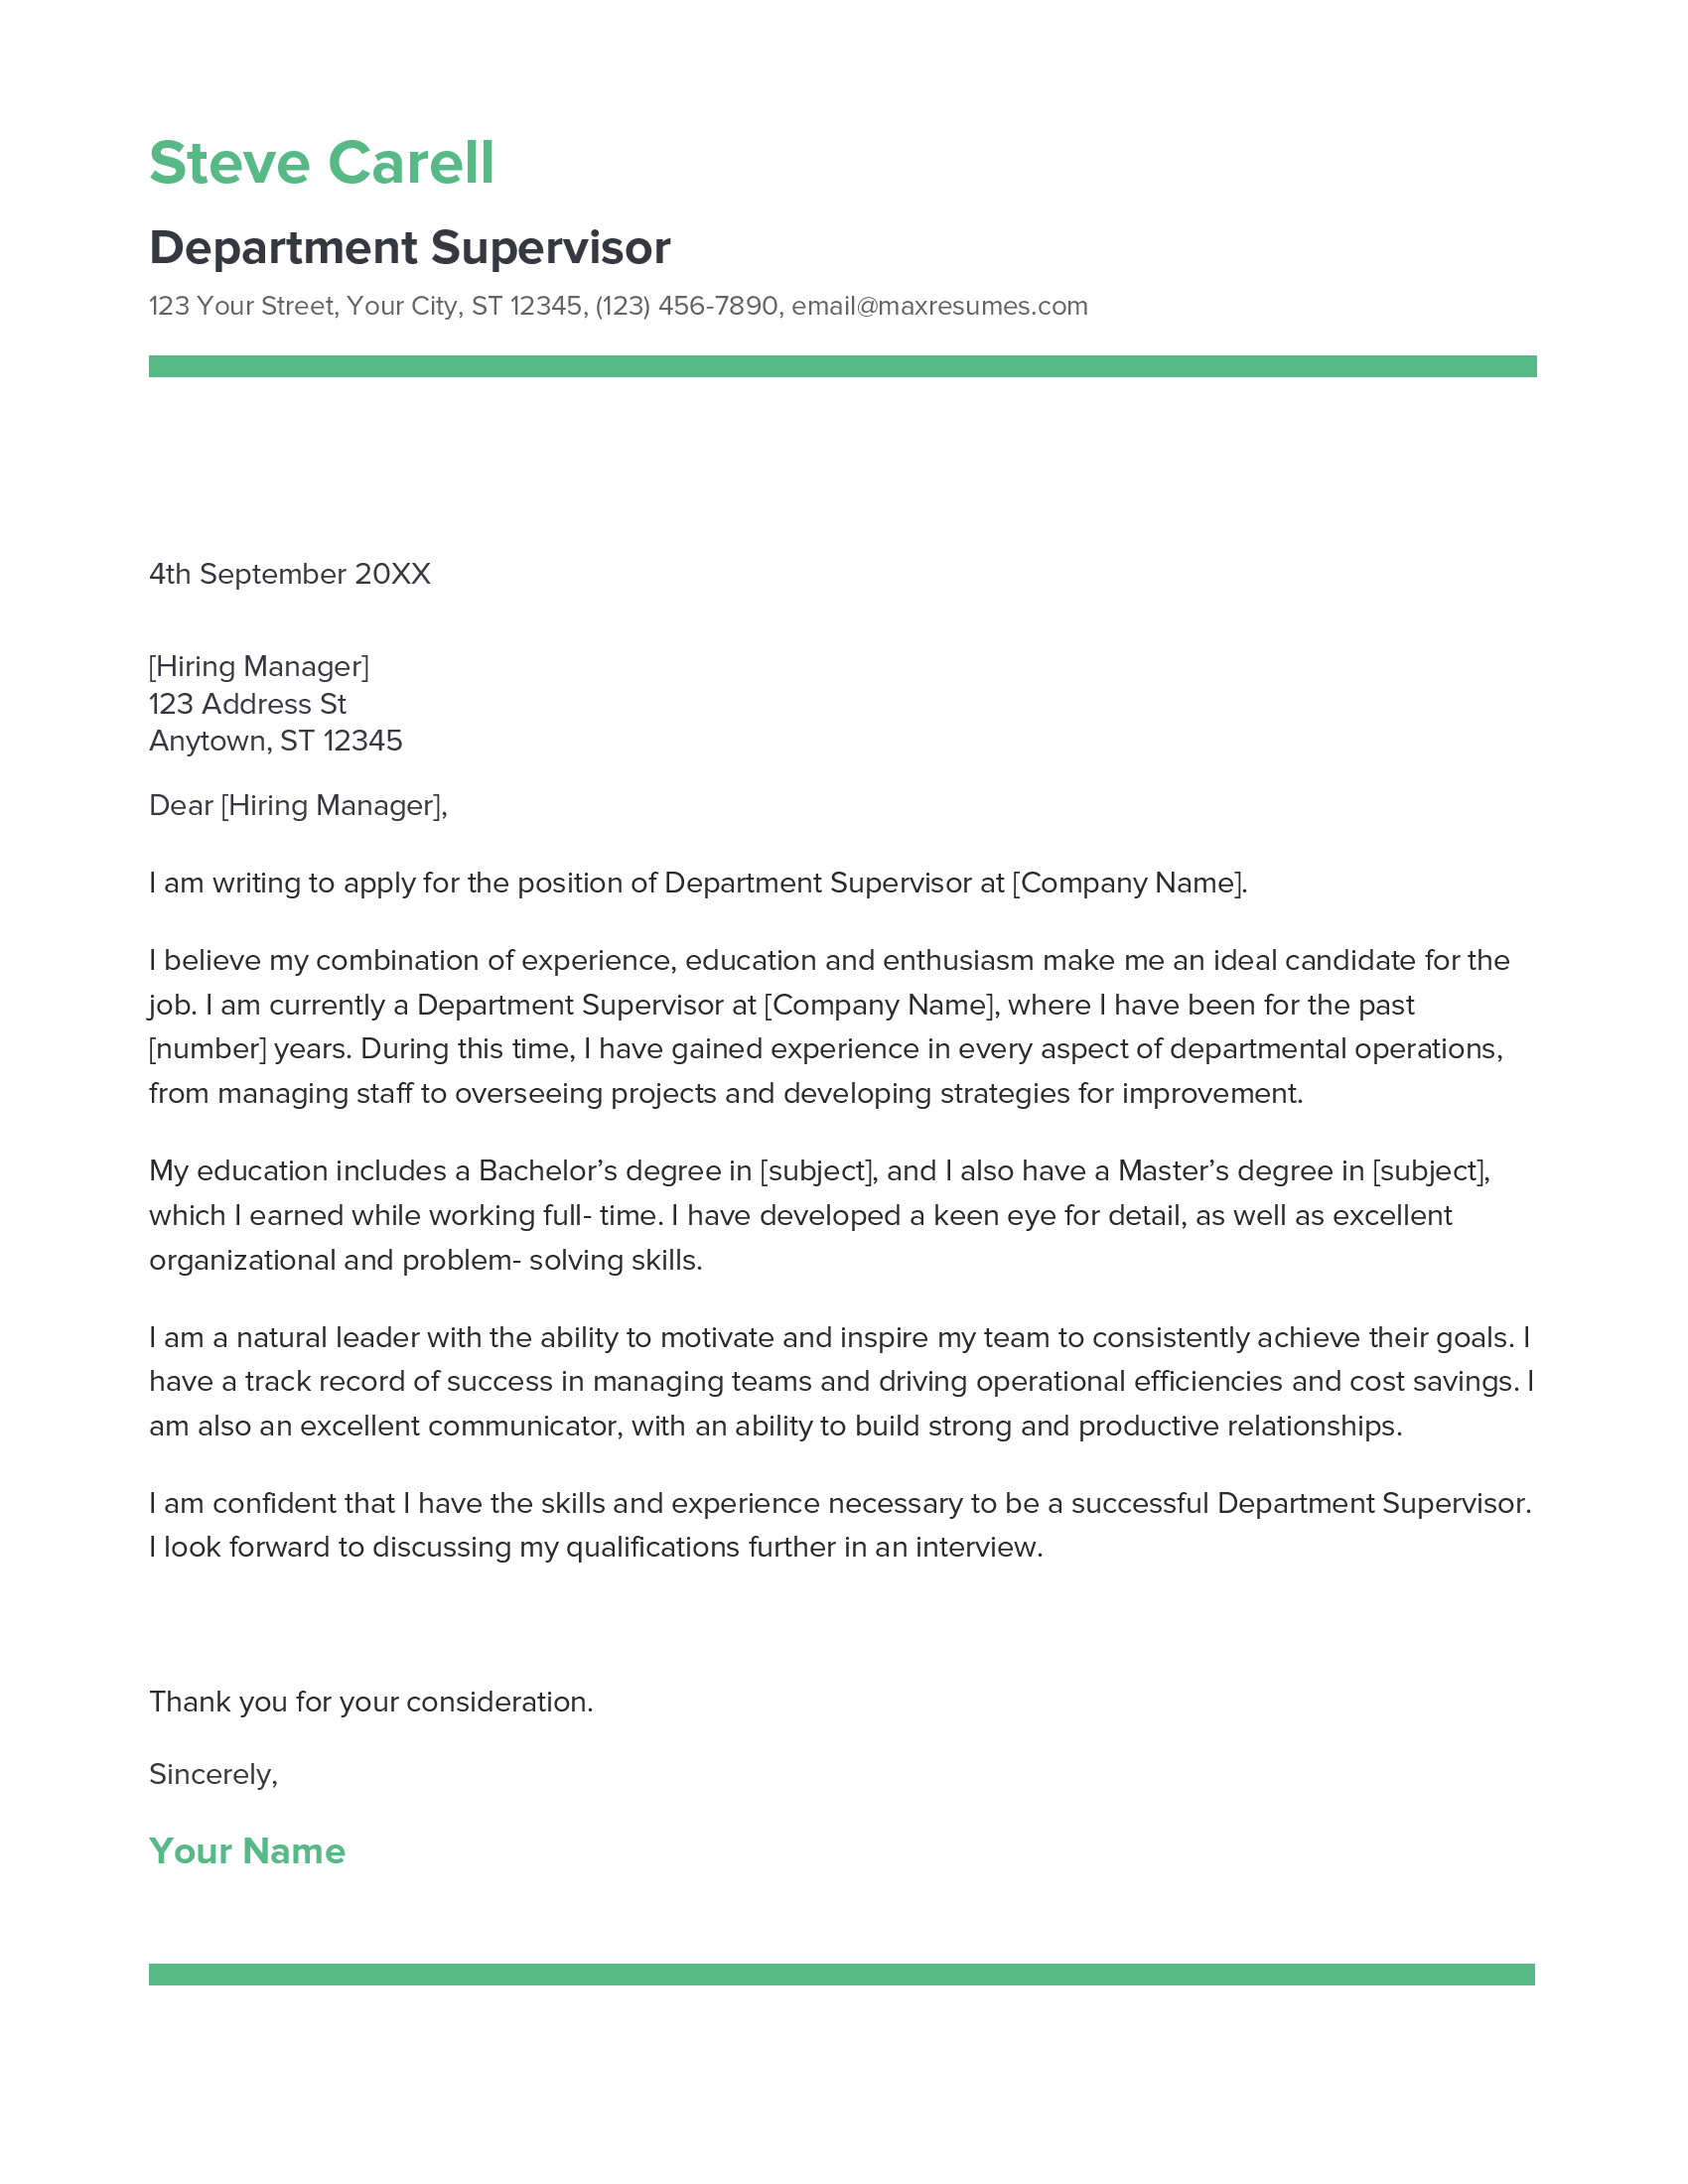 Department Supervisor Cover Letter Example